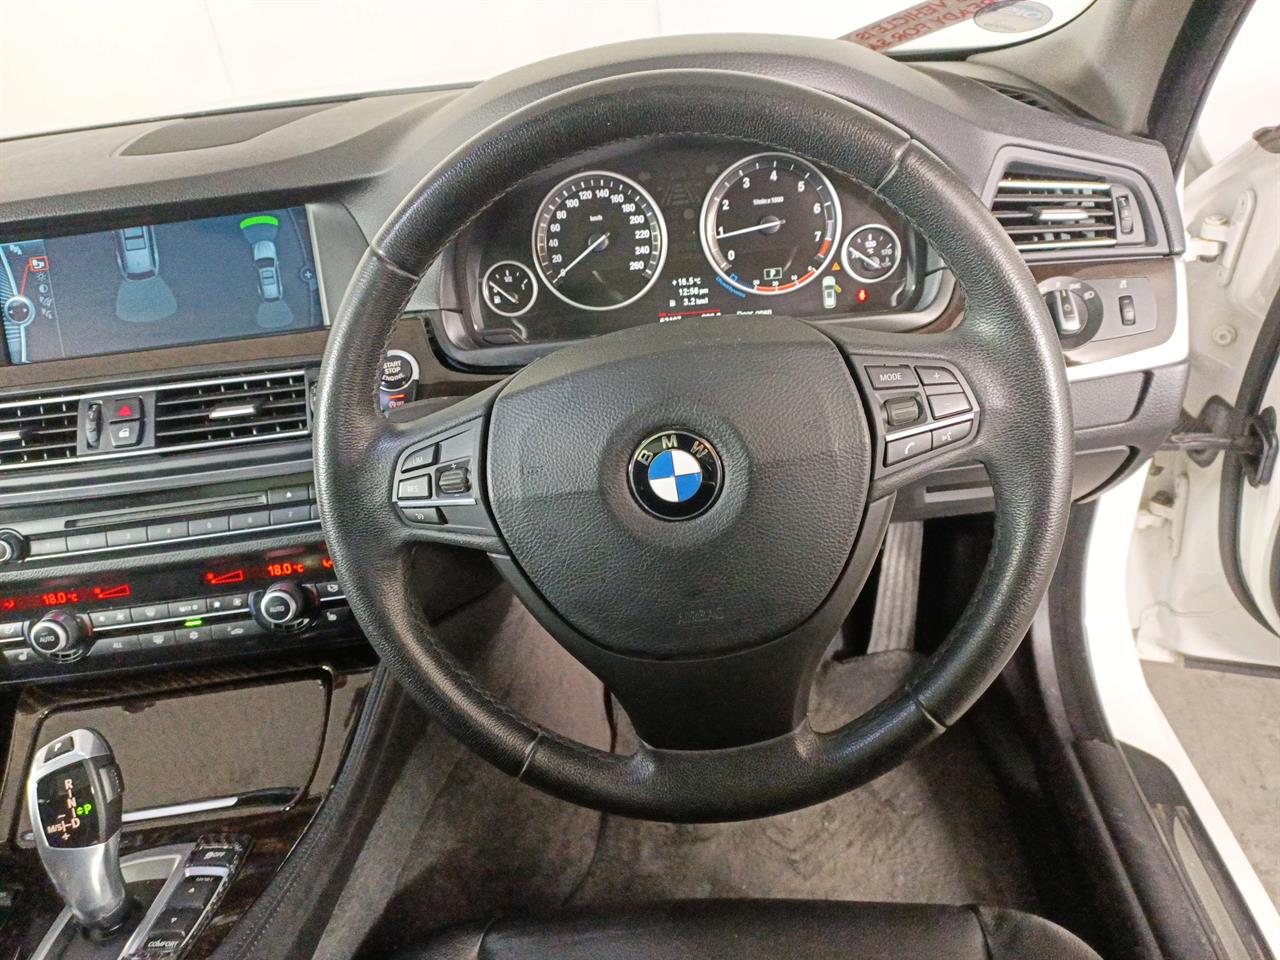 2012 BMW 523i Touring